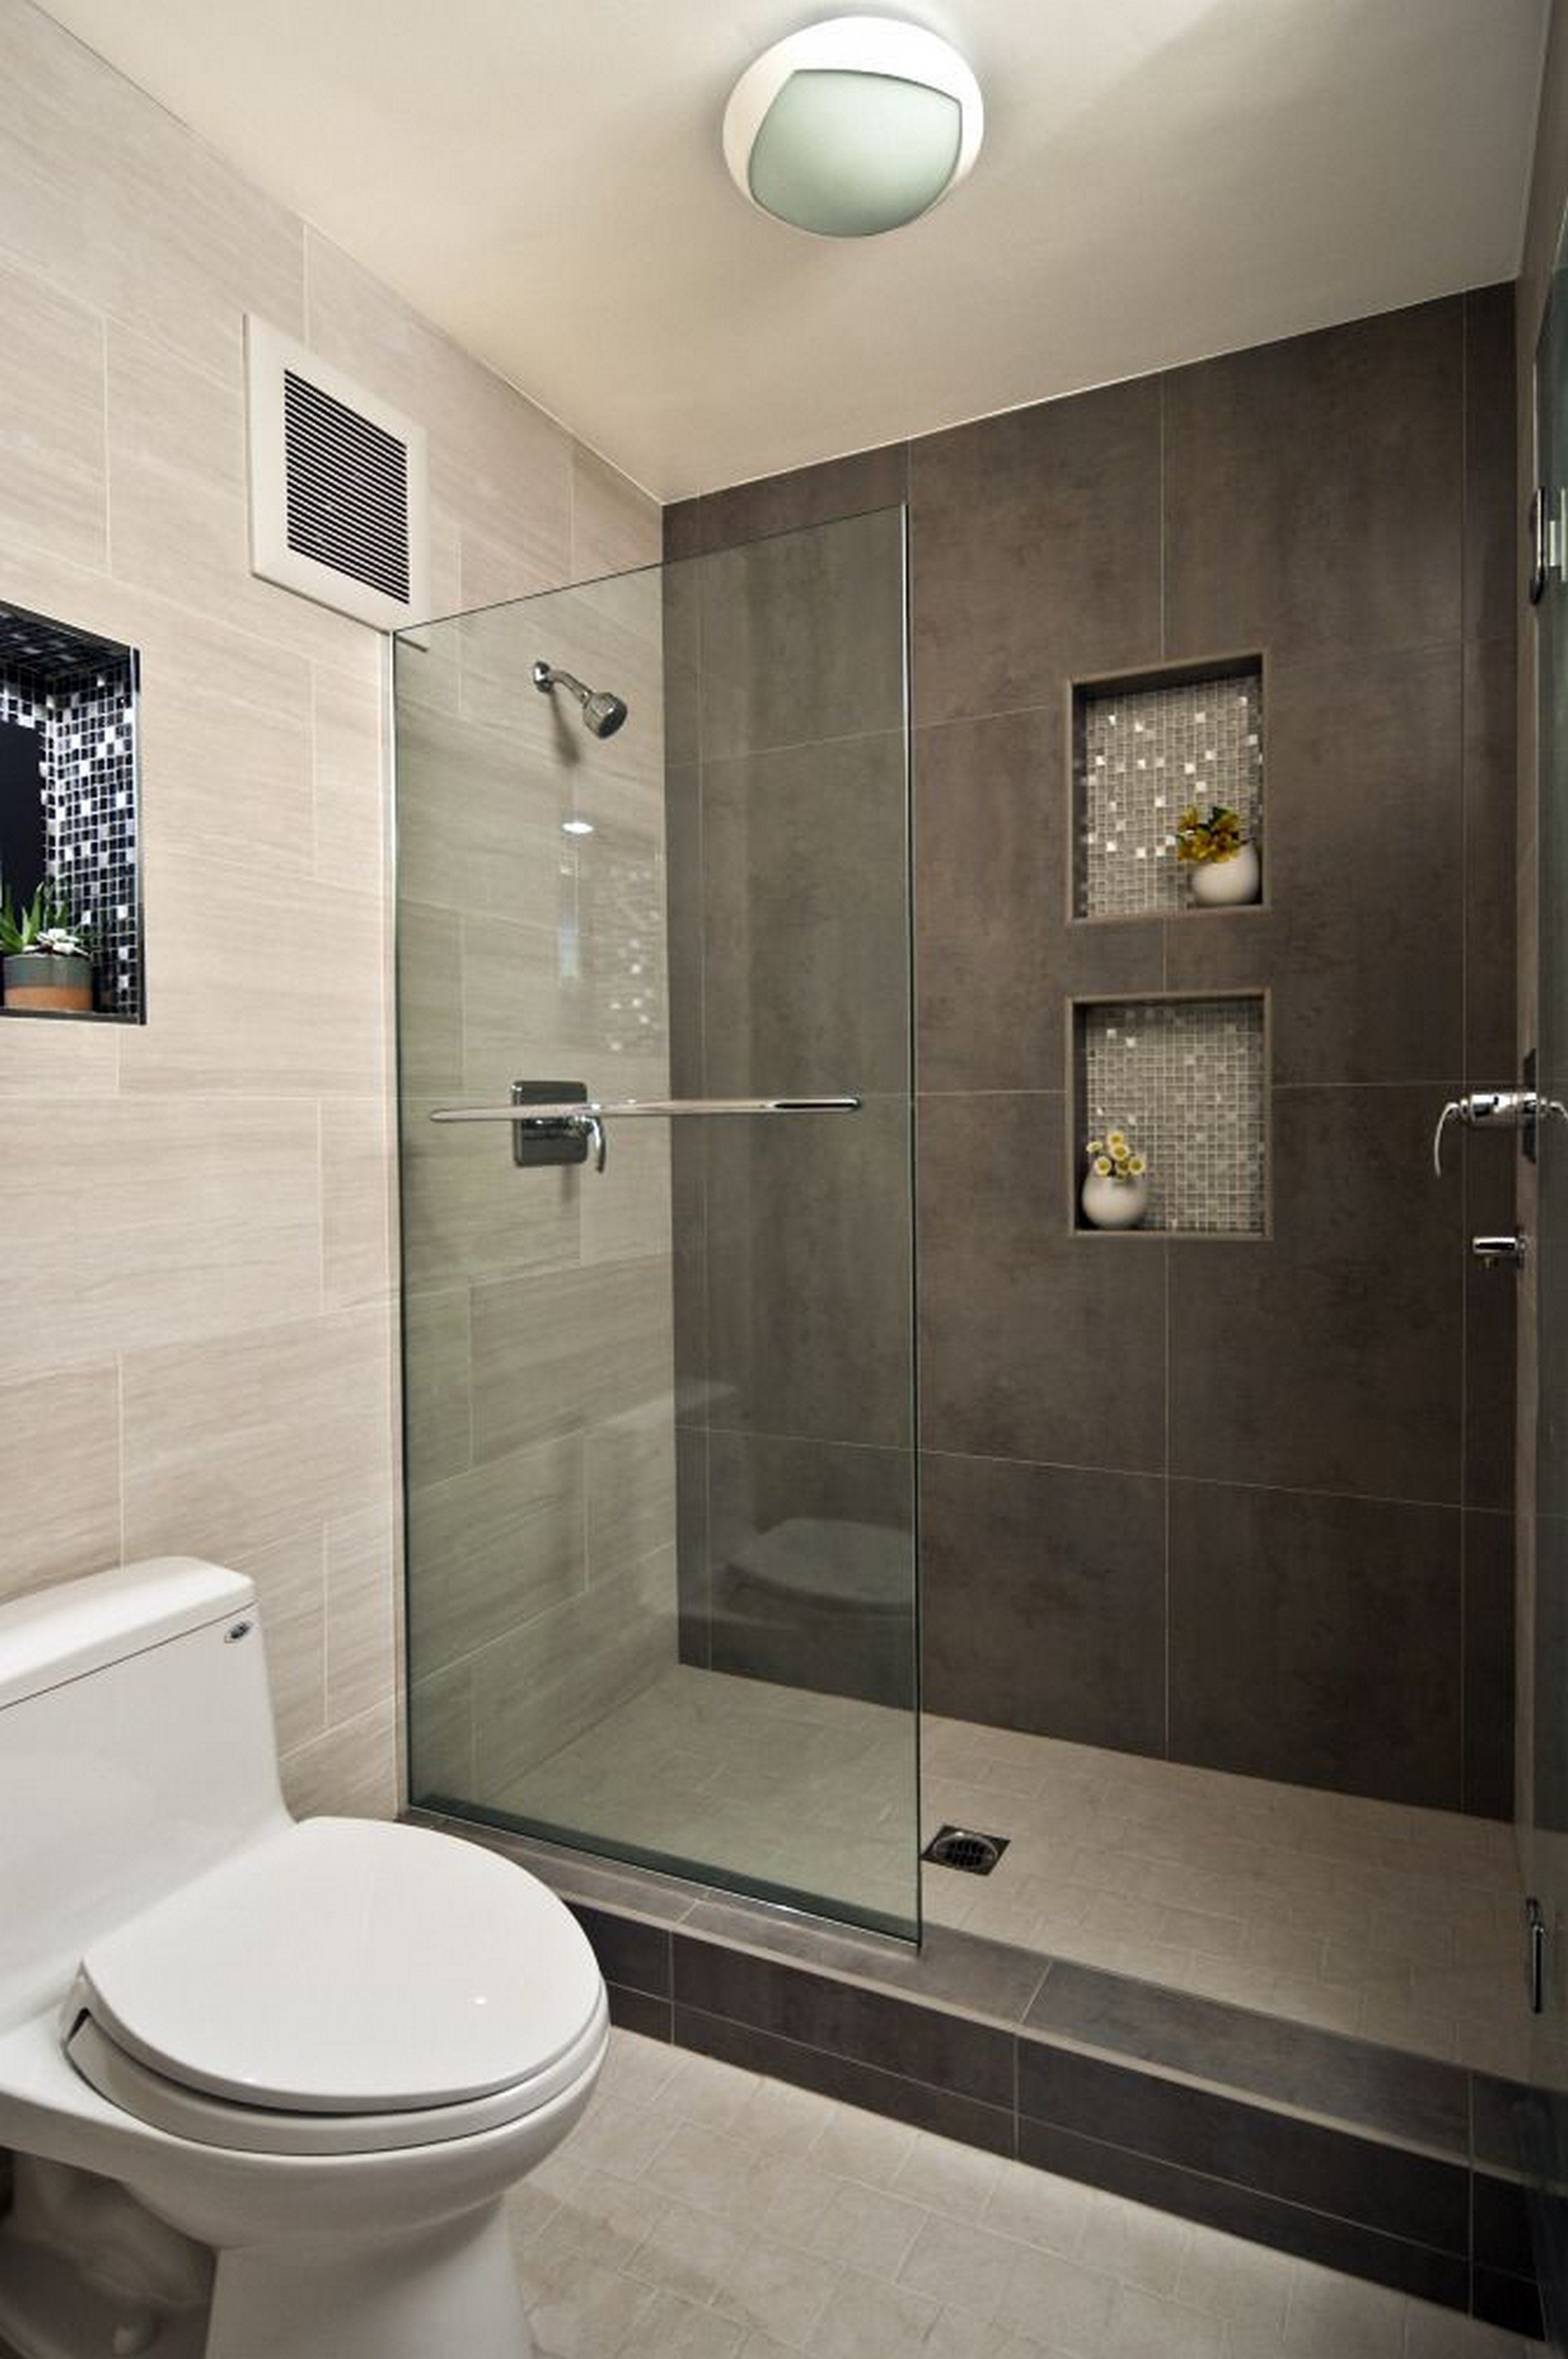 10 Perfect Small Bathroom Ideas Photo Gallery bathroom bathroom renovation ideas modern bathroom ideas bathroom 2022